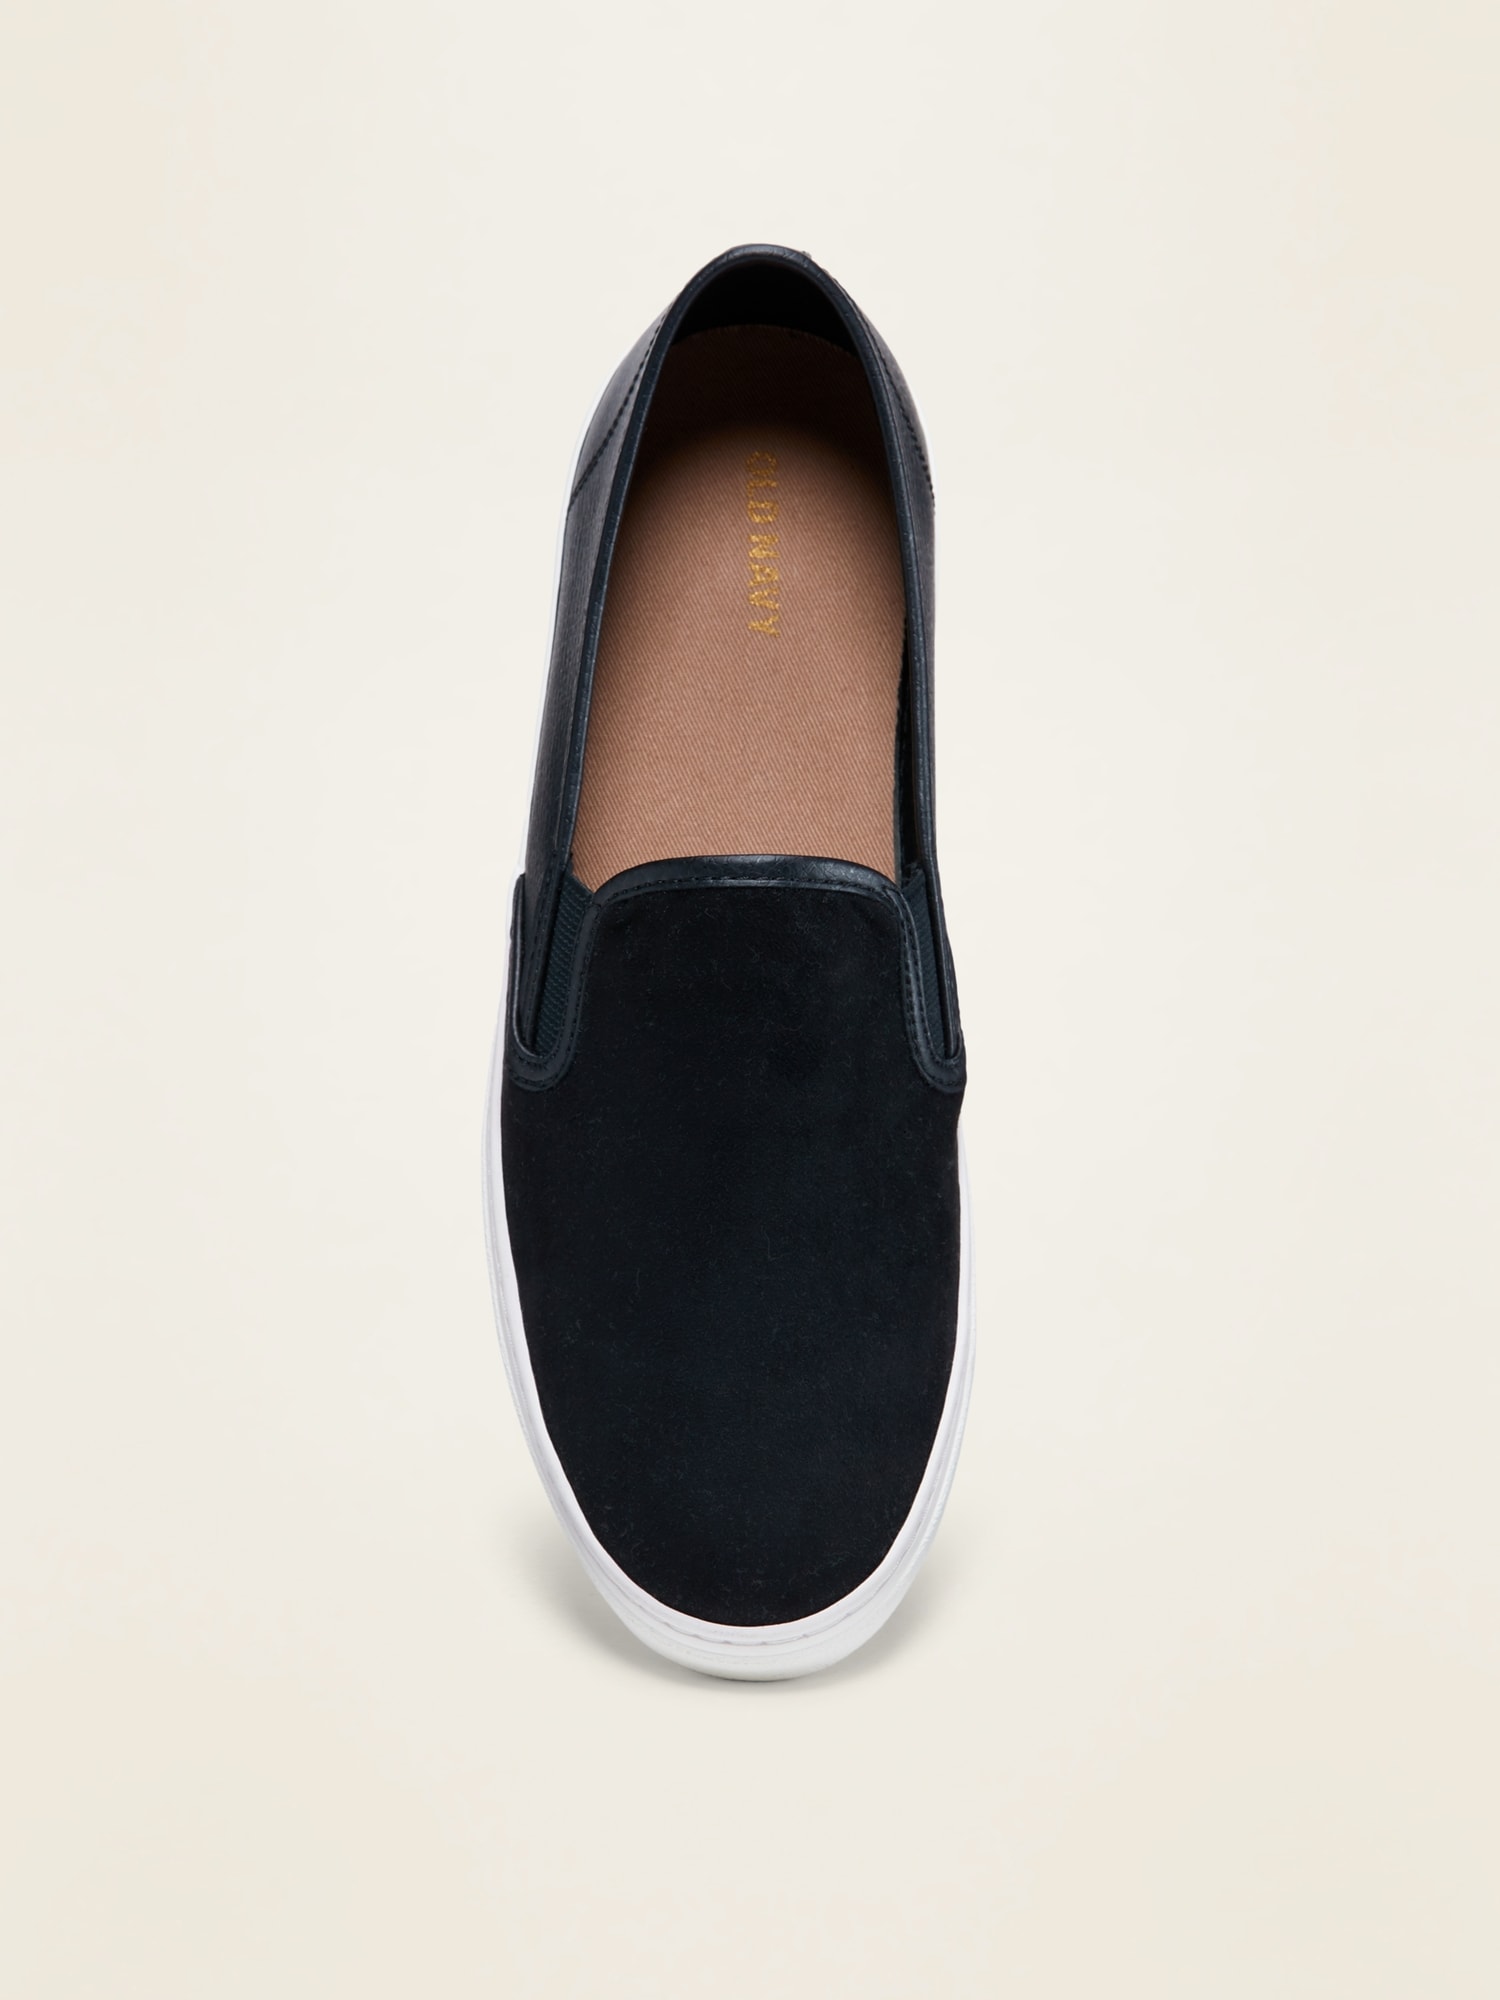 old navy black slip on shoes